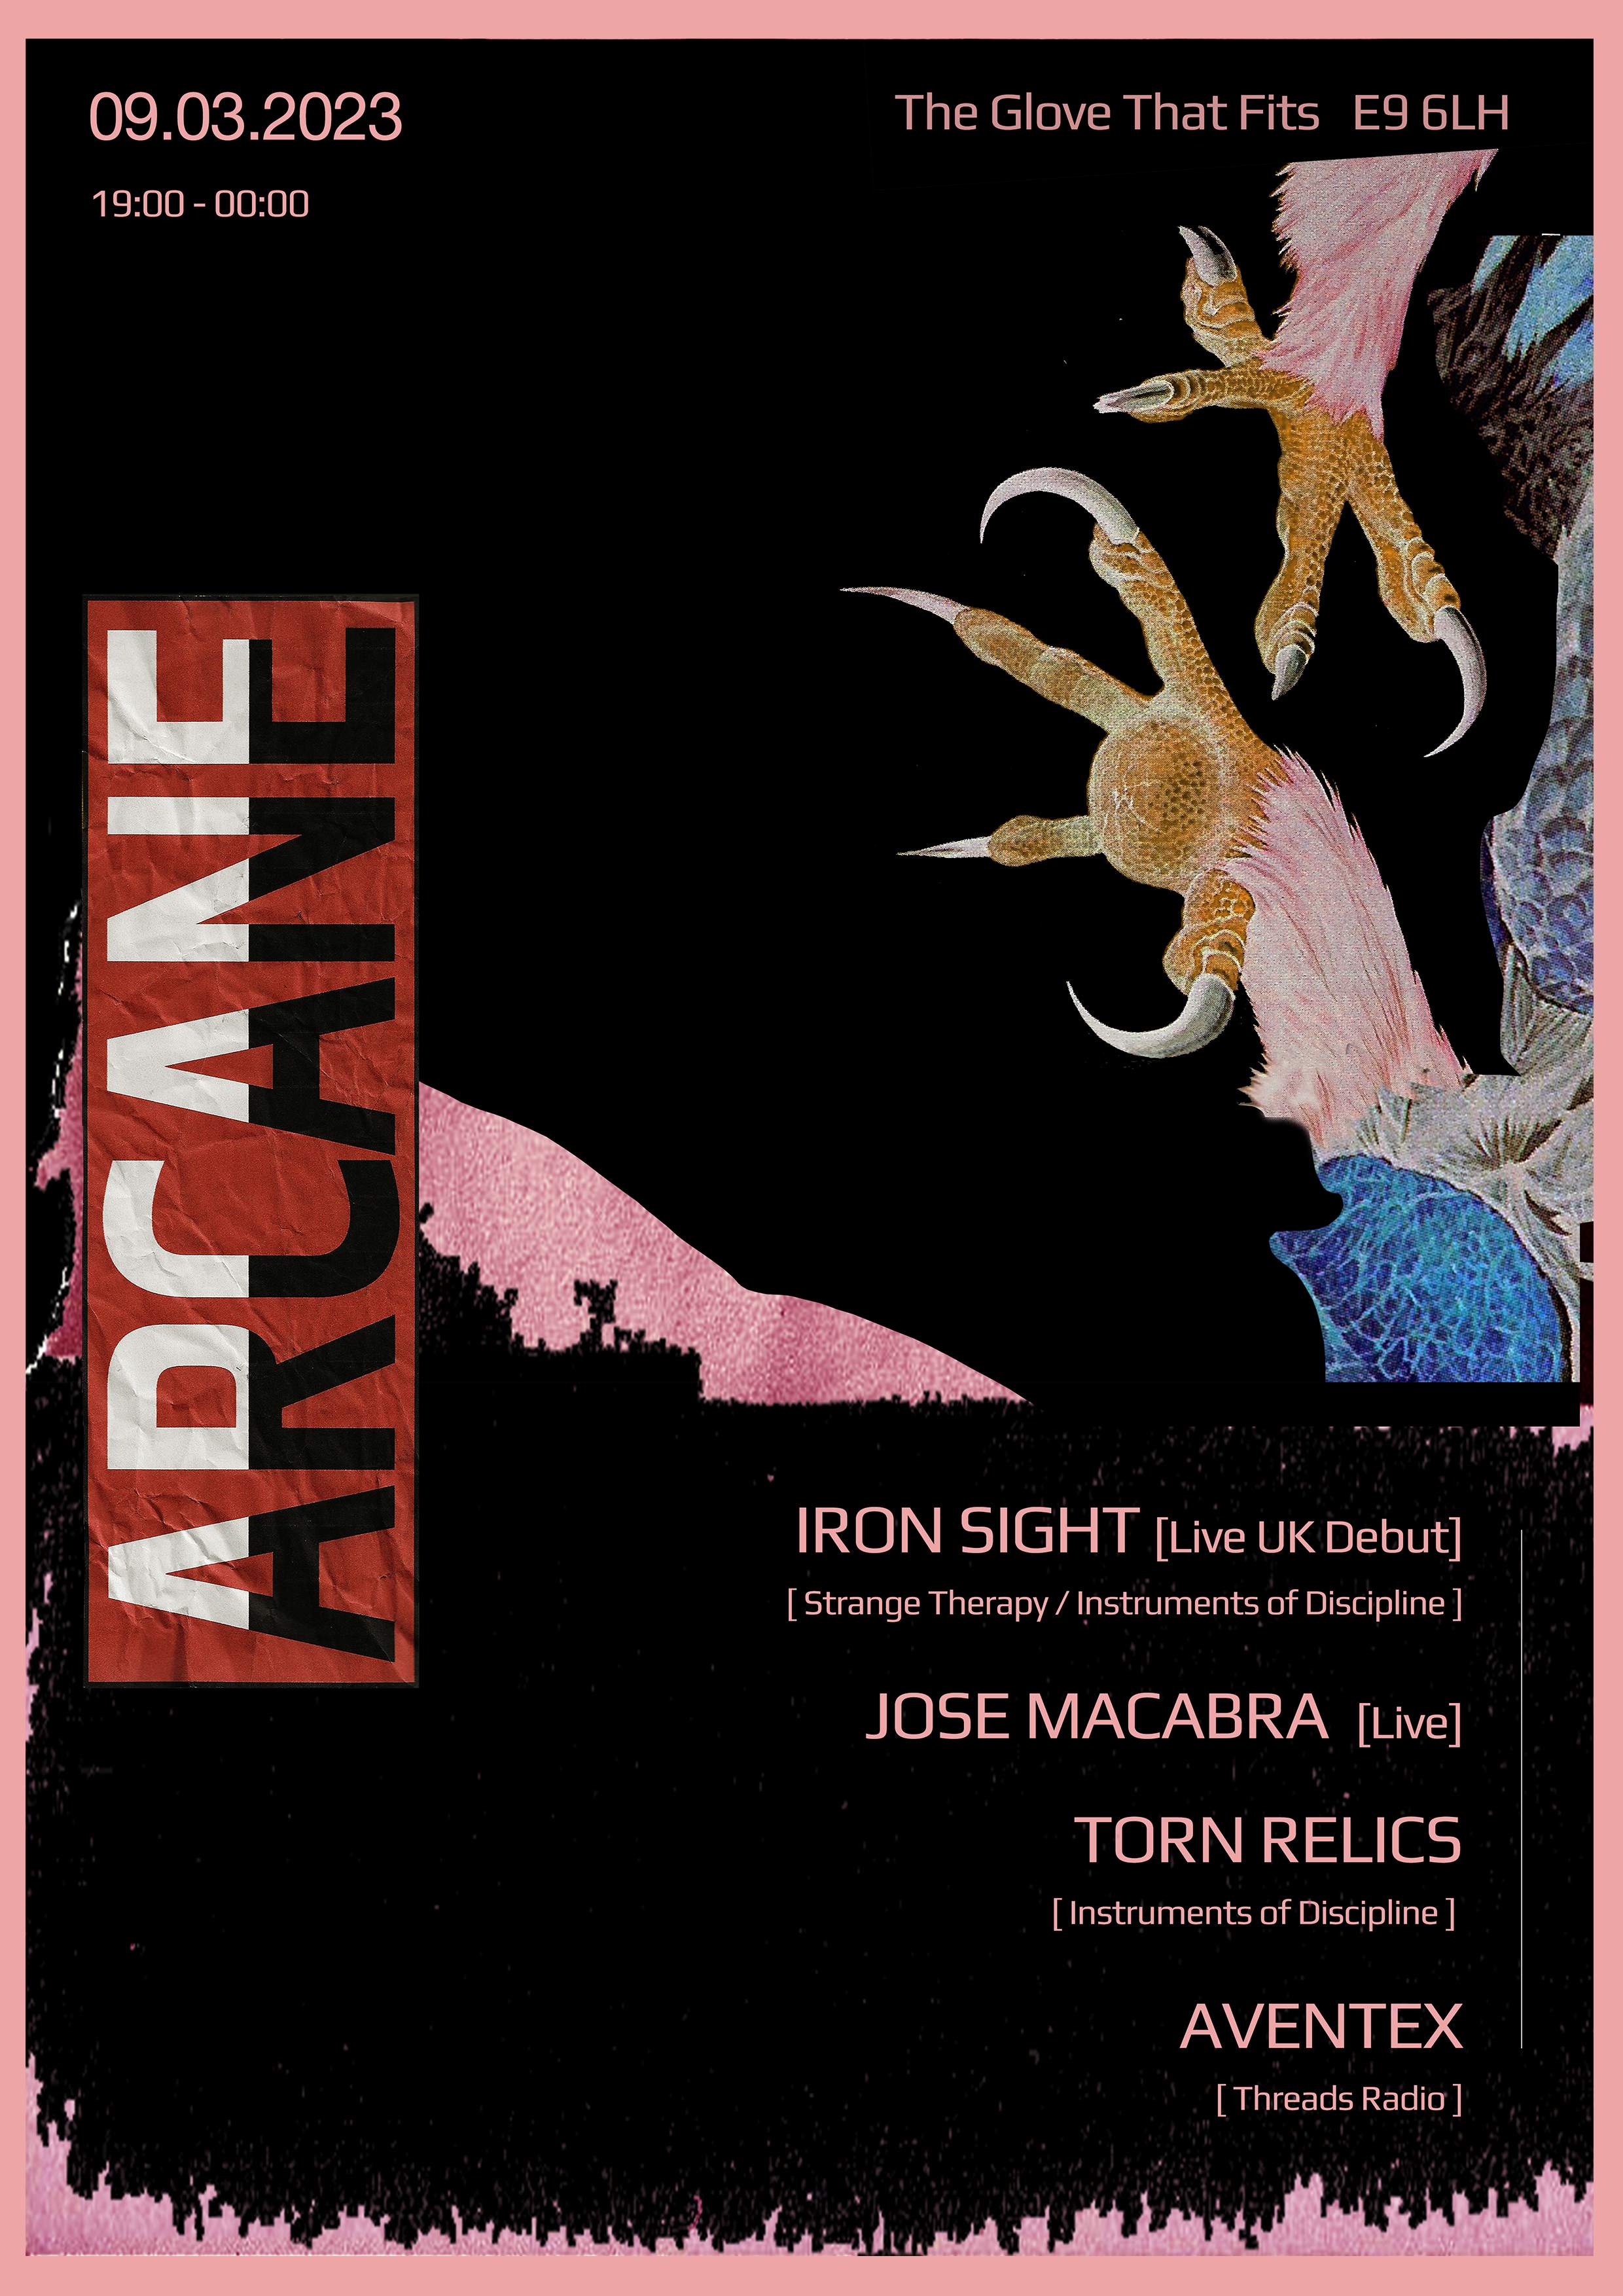 Arcane: Iron Sight (Live UK Debut) Jose Macabra (Live) Torn Relics & Aventex  - フライヤー裏